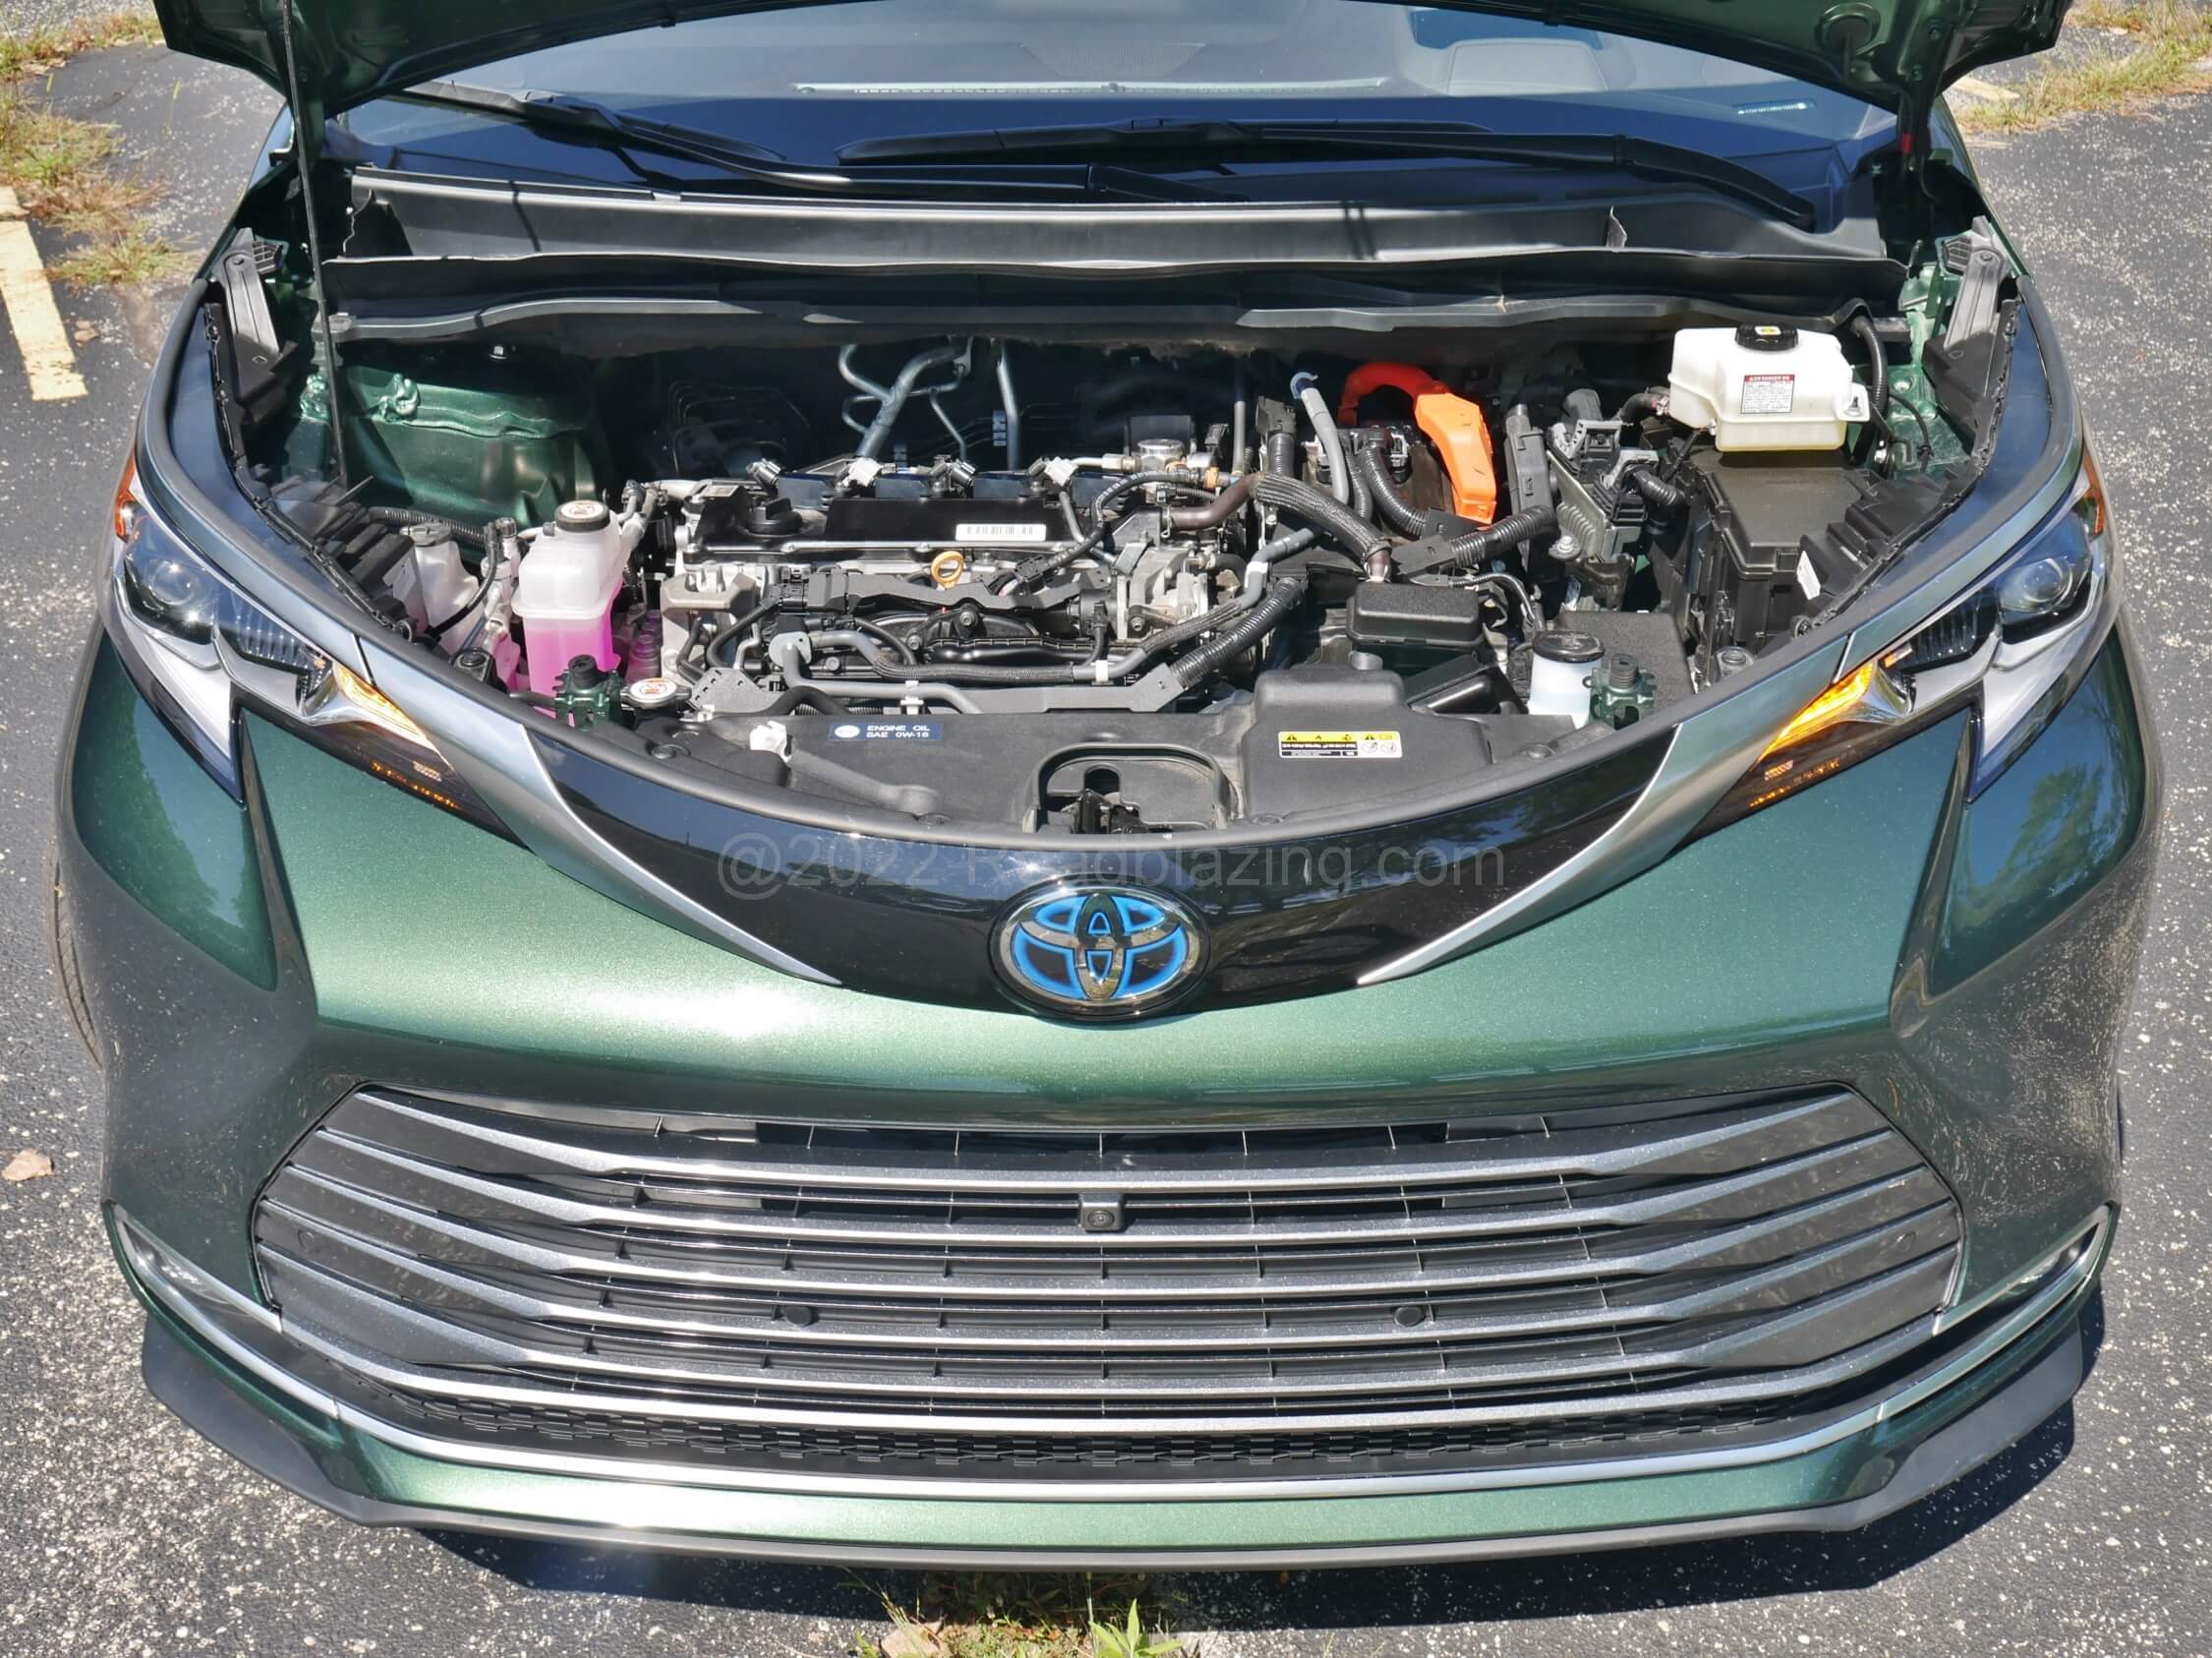 2021 Toyota Sienna Hybrid Platinum AWD: 1.9 kWh battery motor electrified Atkinson cycle 2.5L gas engine = 245 net HP + CVT + available rear wheel 53 hp AWD motor